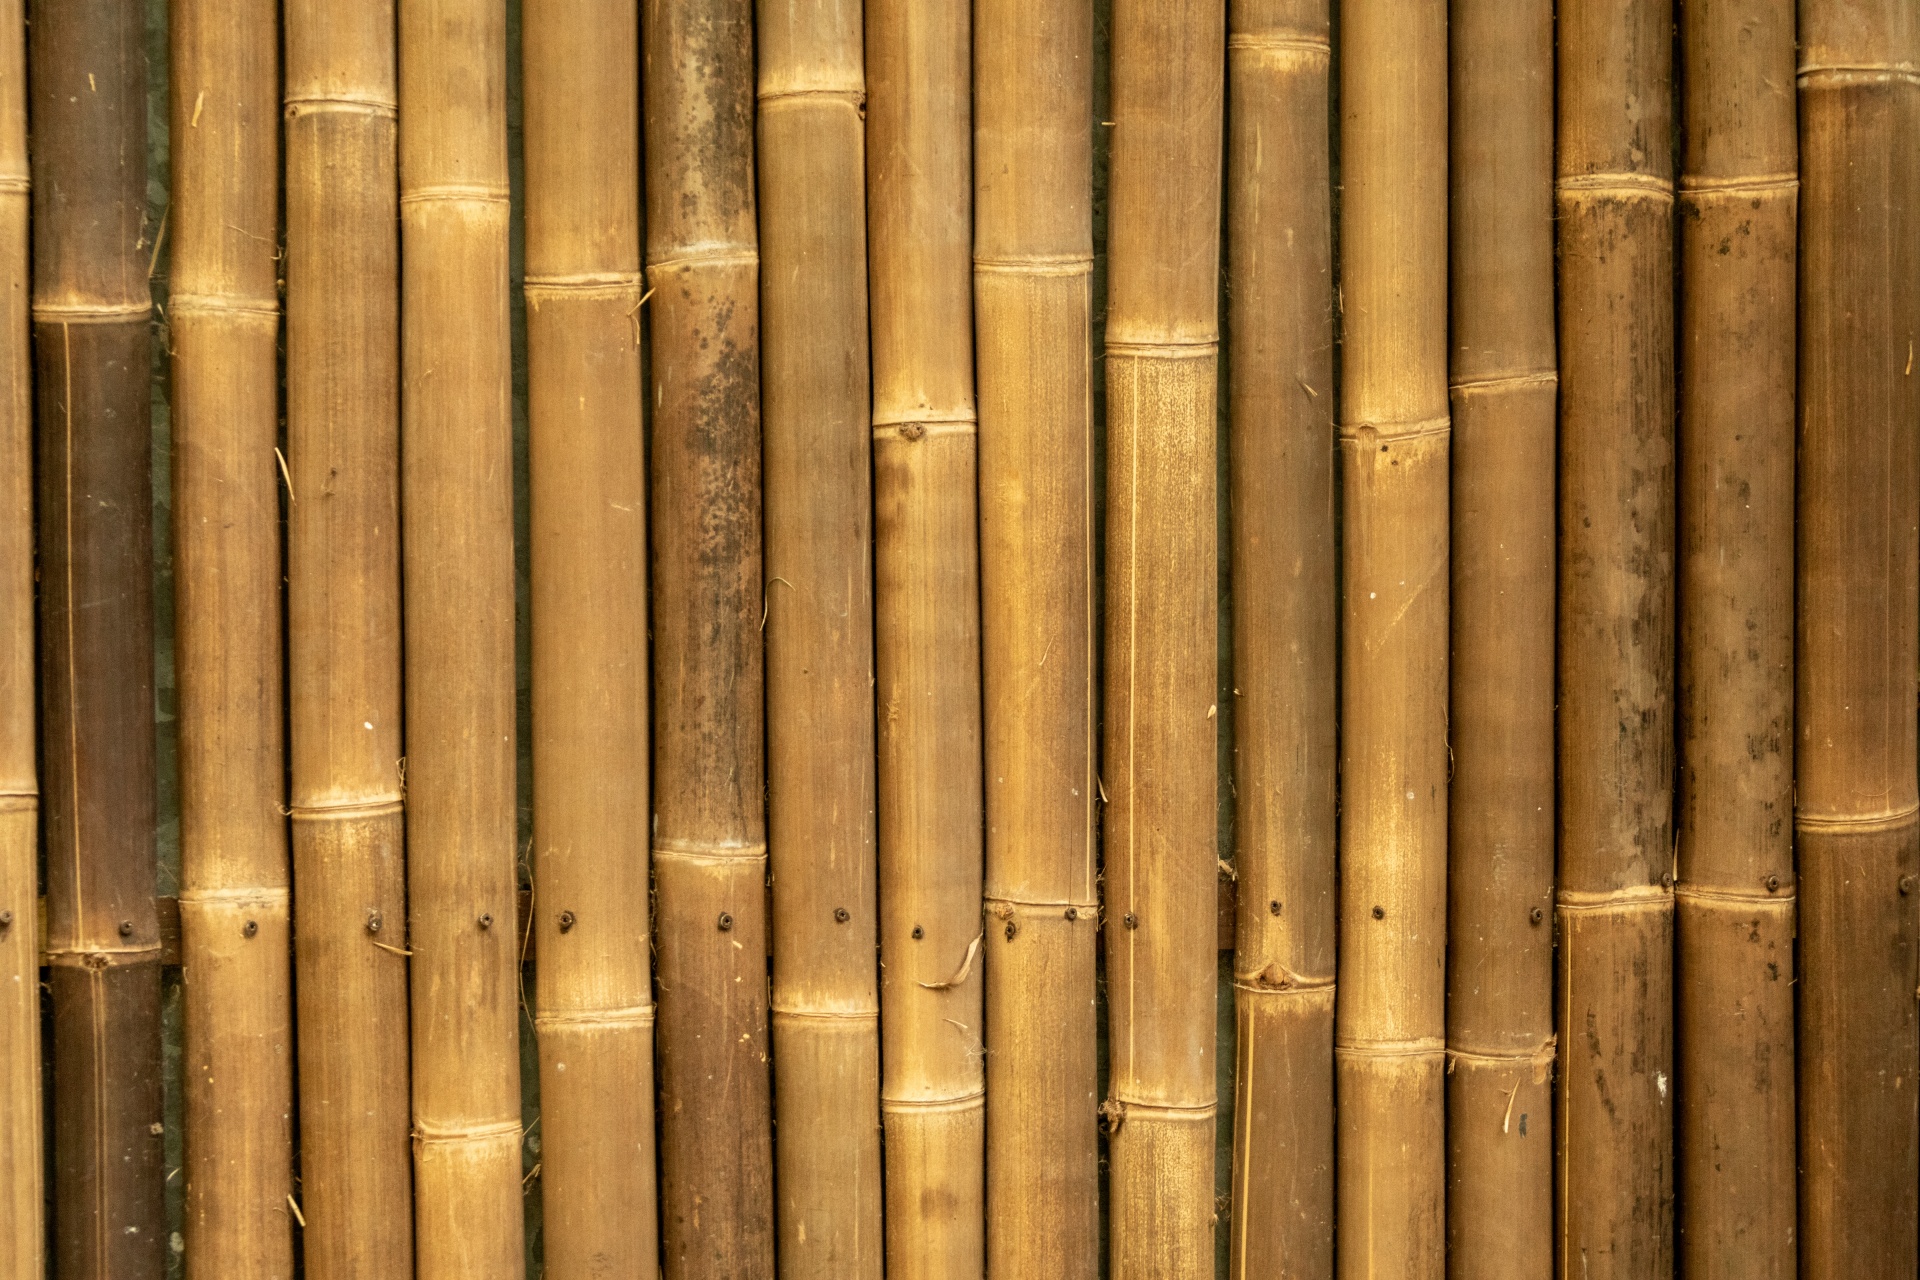 Fundul de bambus maro